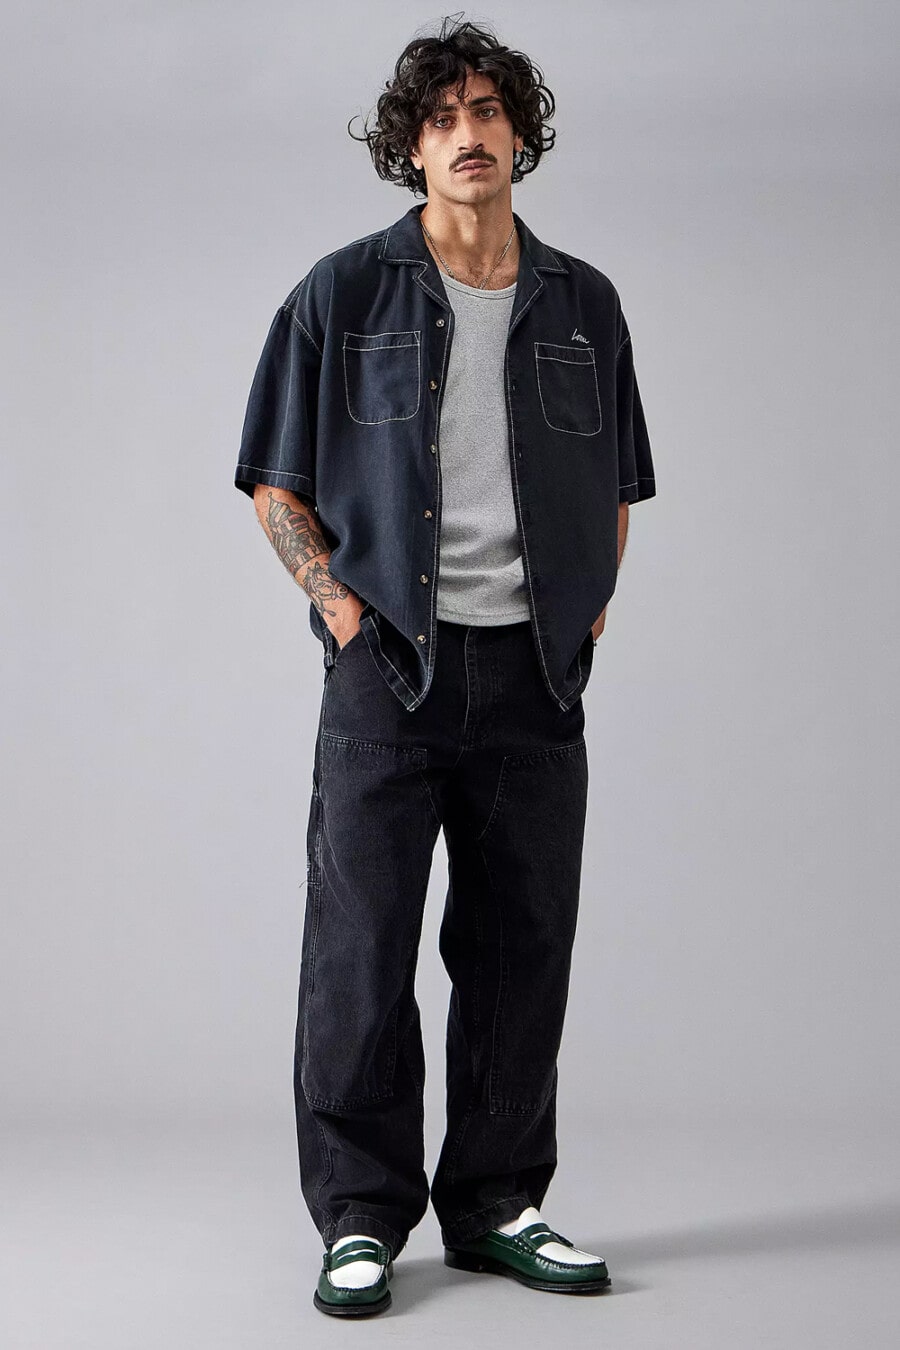 Men's black baggy jeans, grey vest, denim short sleeve mechanics shirt and spectator loafers outfit